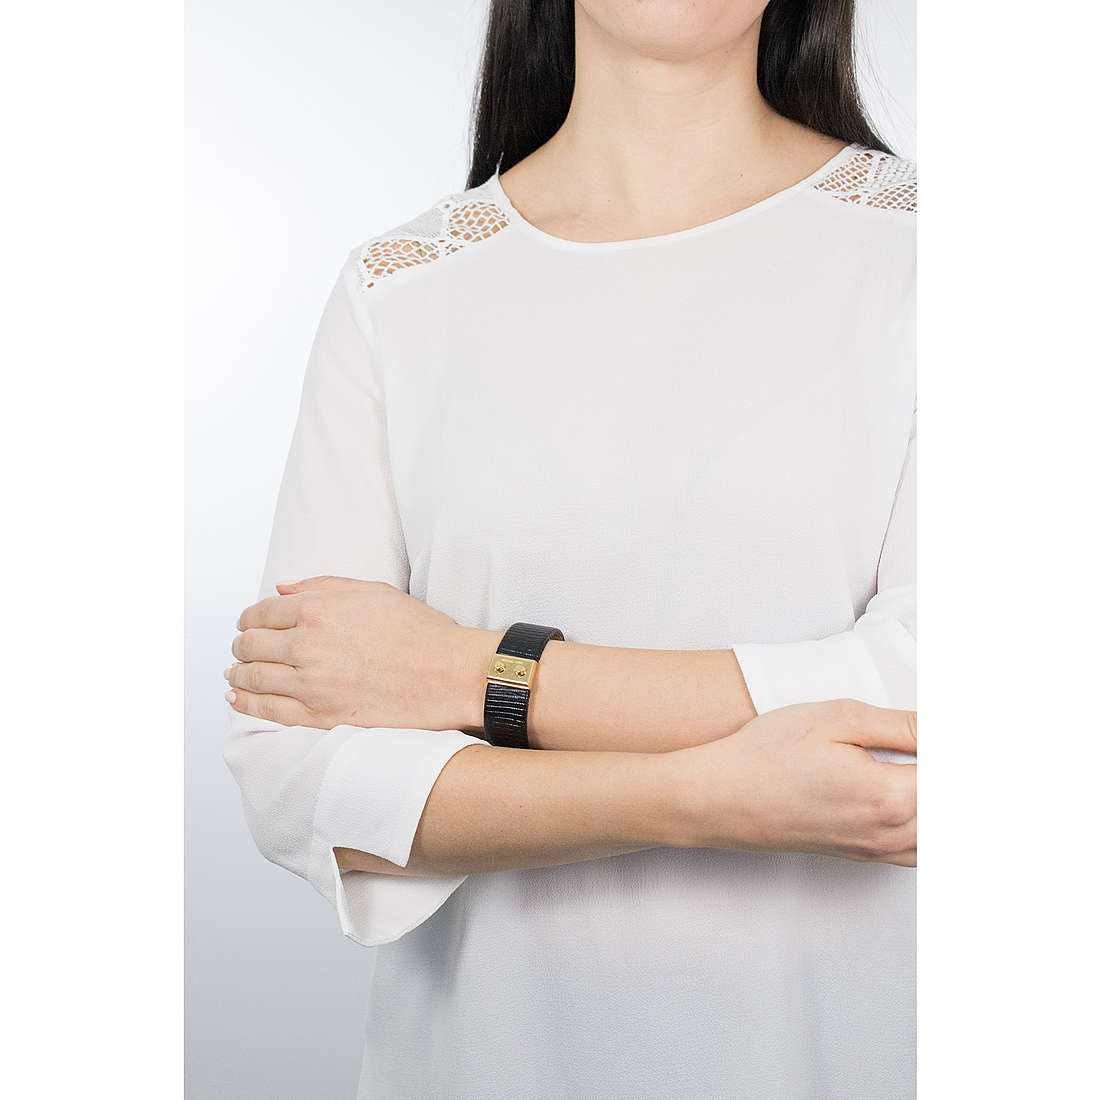 Michael Kors bracciali Iconic donna MKJ6808710 indosso